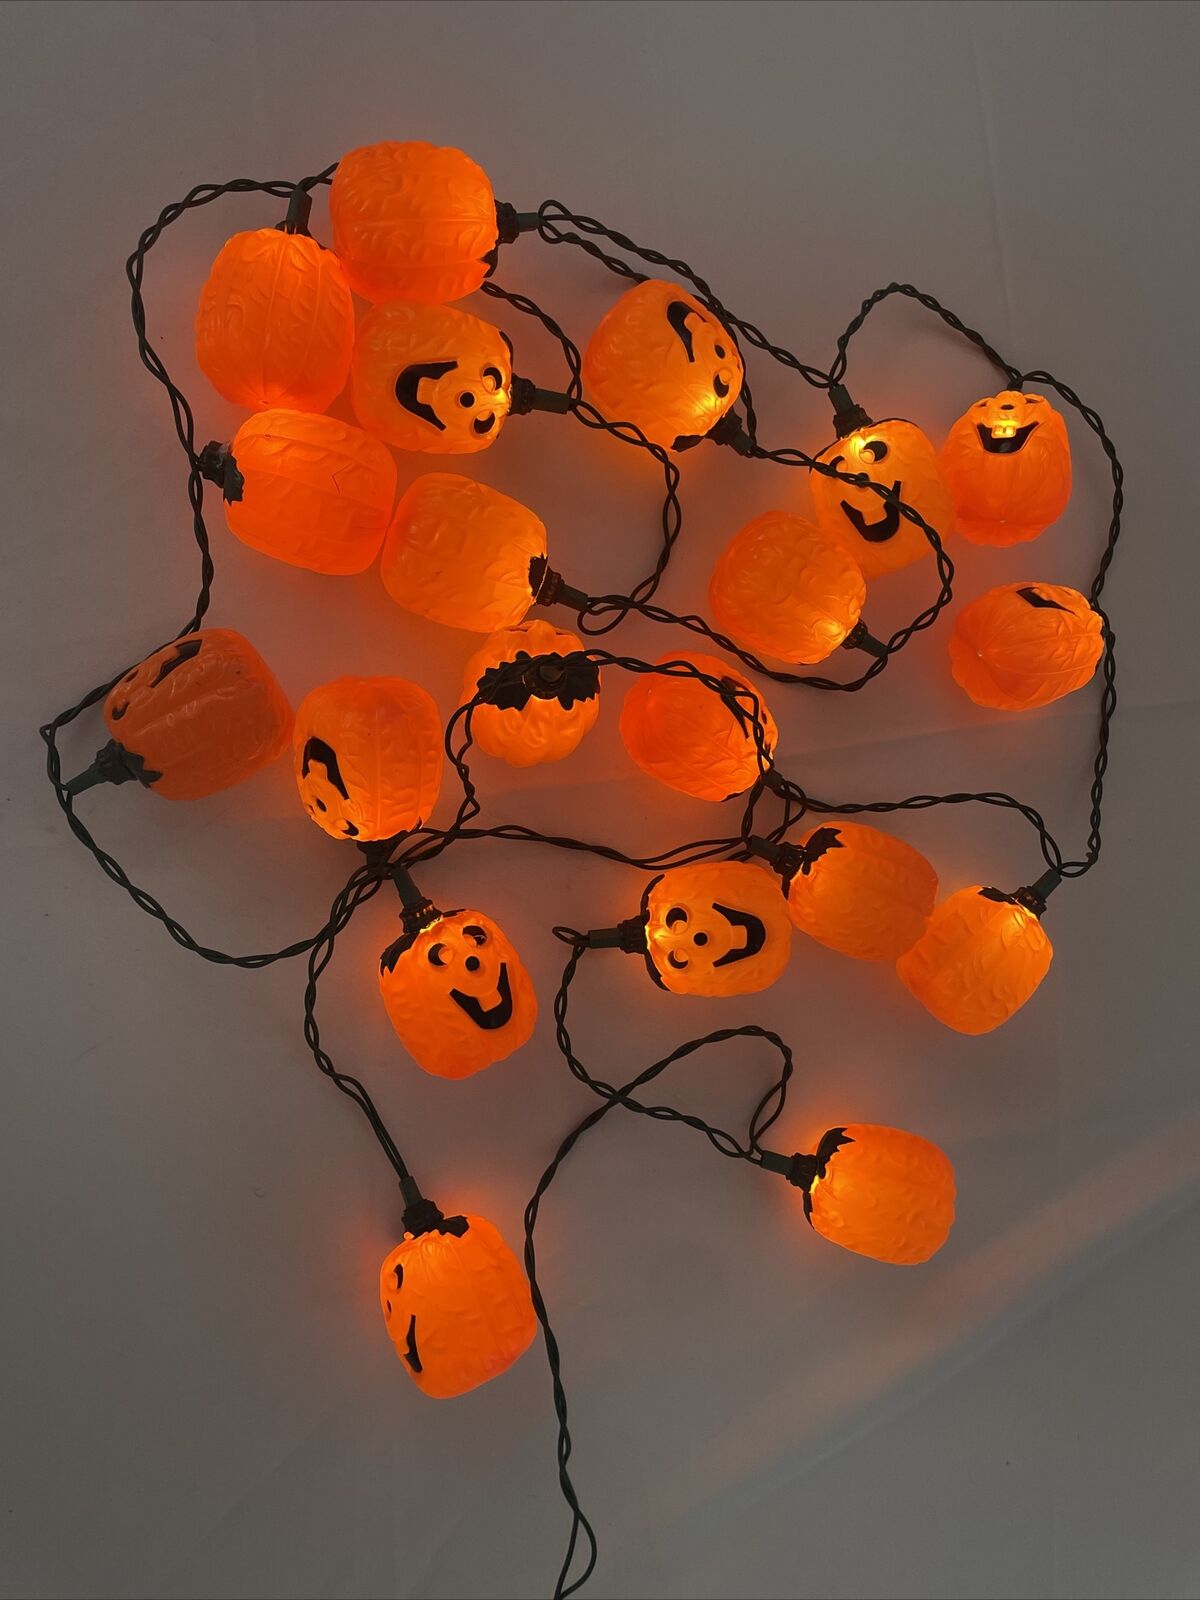 Vintage Halloween 20 Pumpkin Jack O Lantern Blow Mold Indoor String Lights